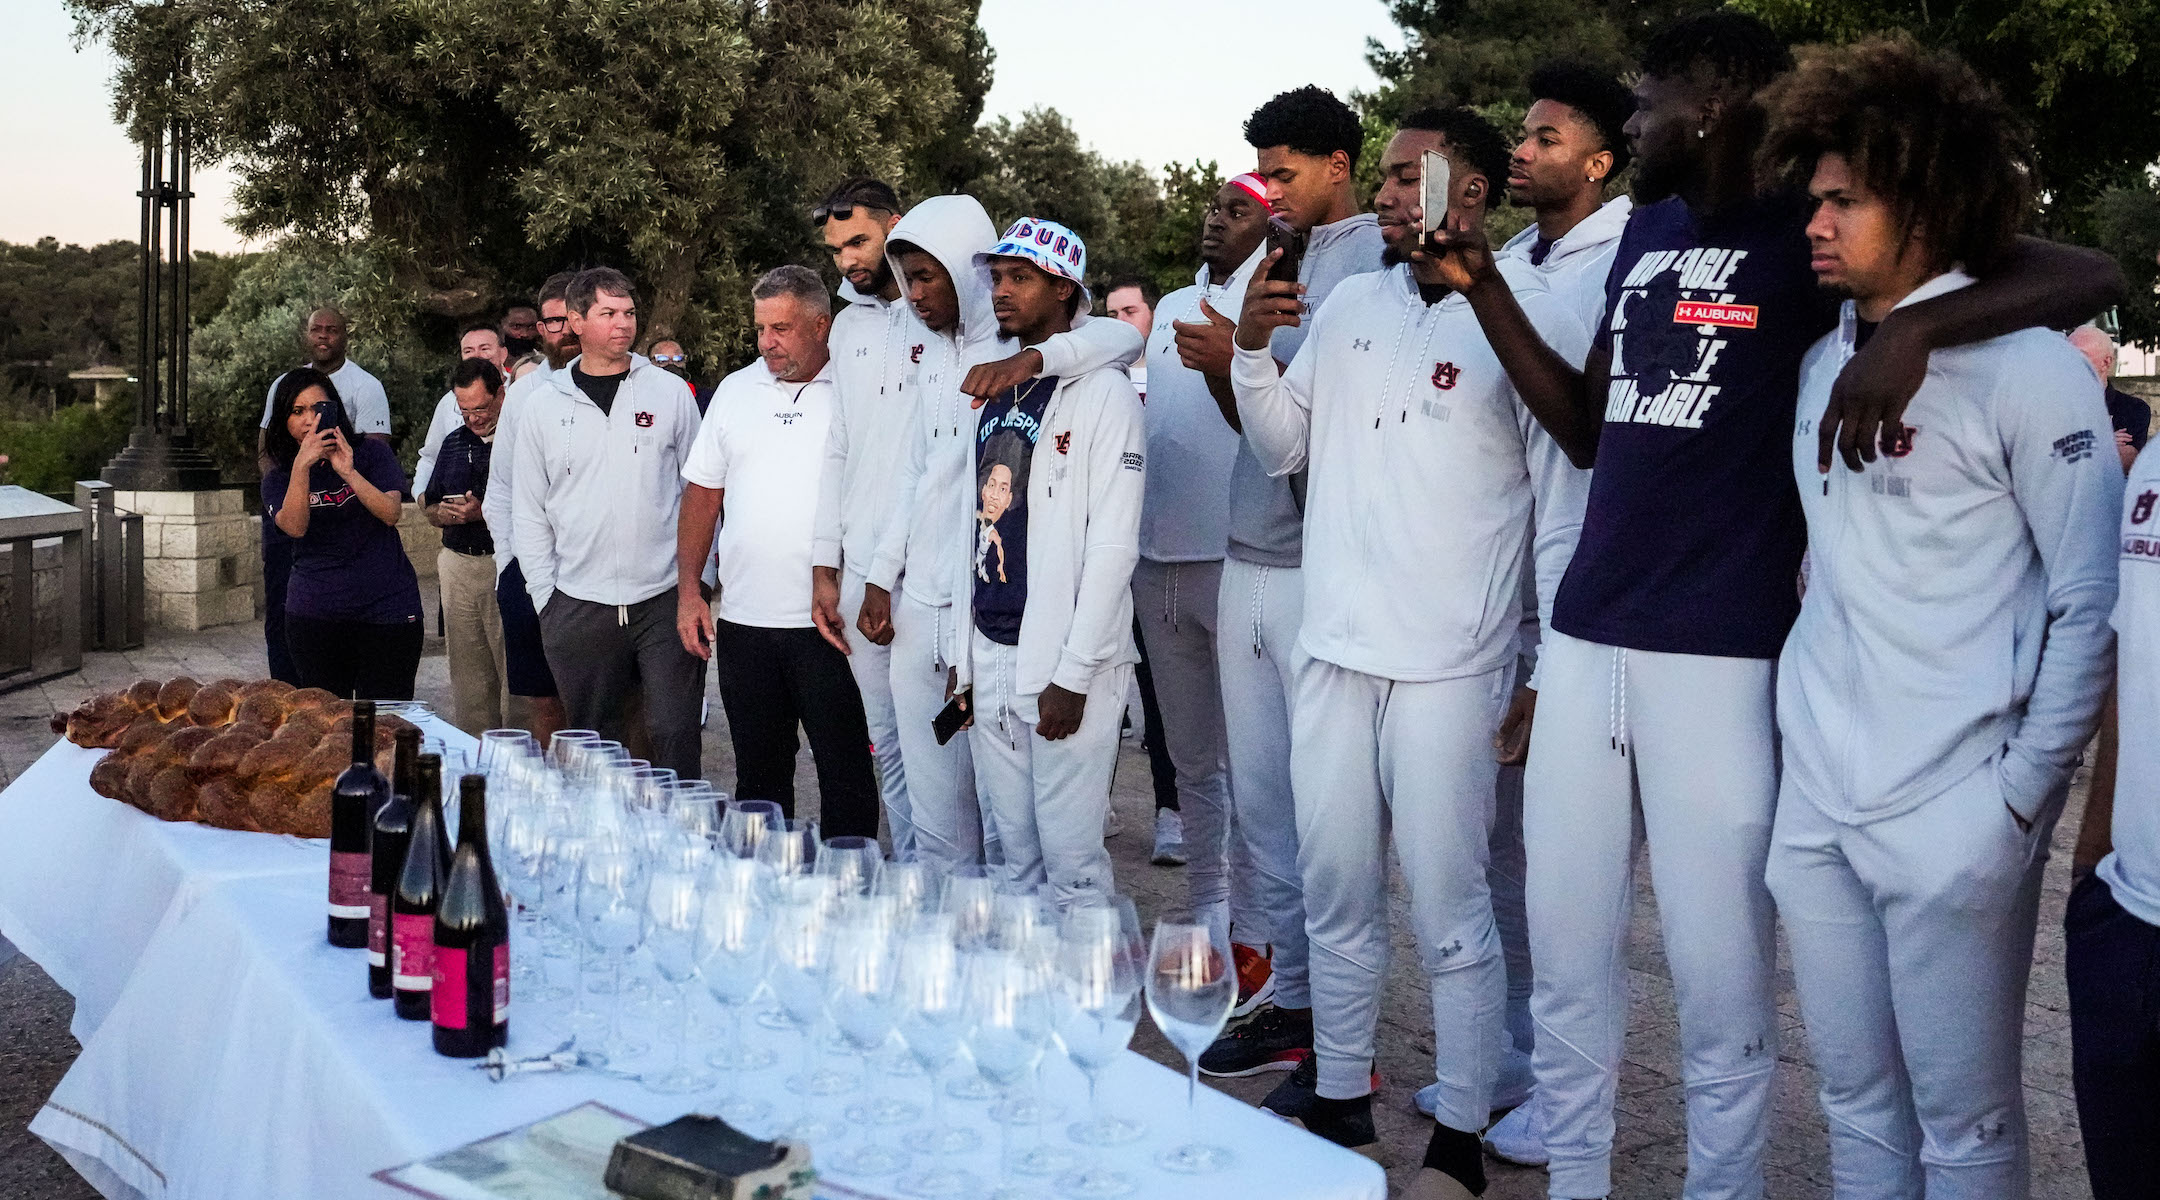 The Auburn University men’s basketball team celebrating Shabbat in Israel, July 31, 2022. (Courtesy Auburn Athletics)